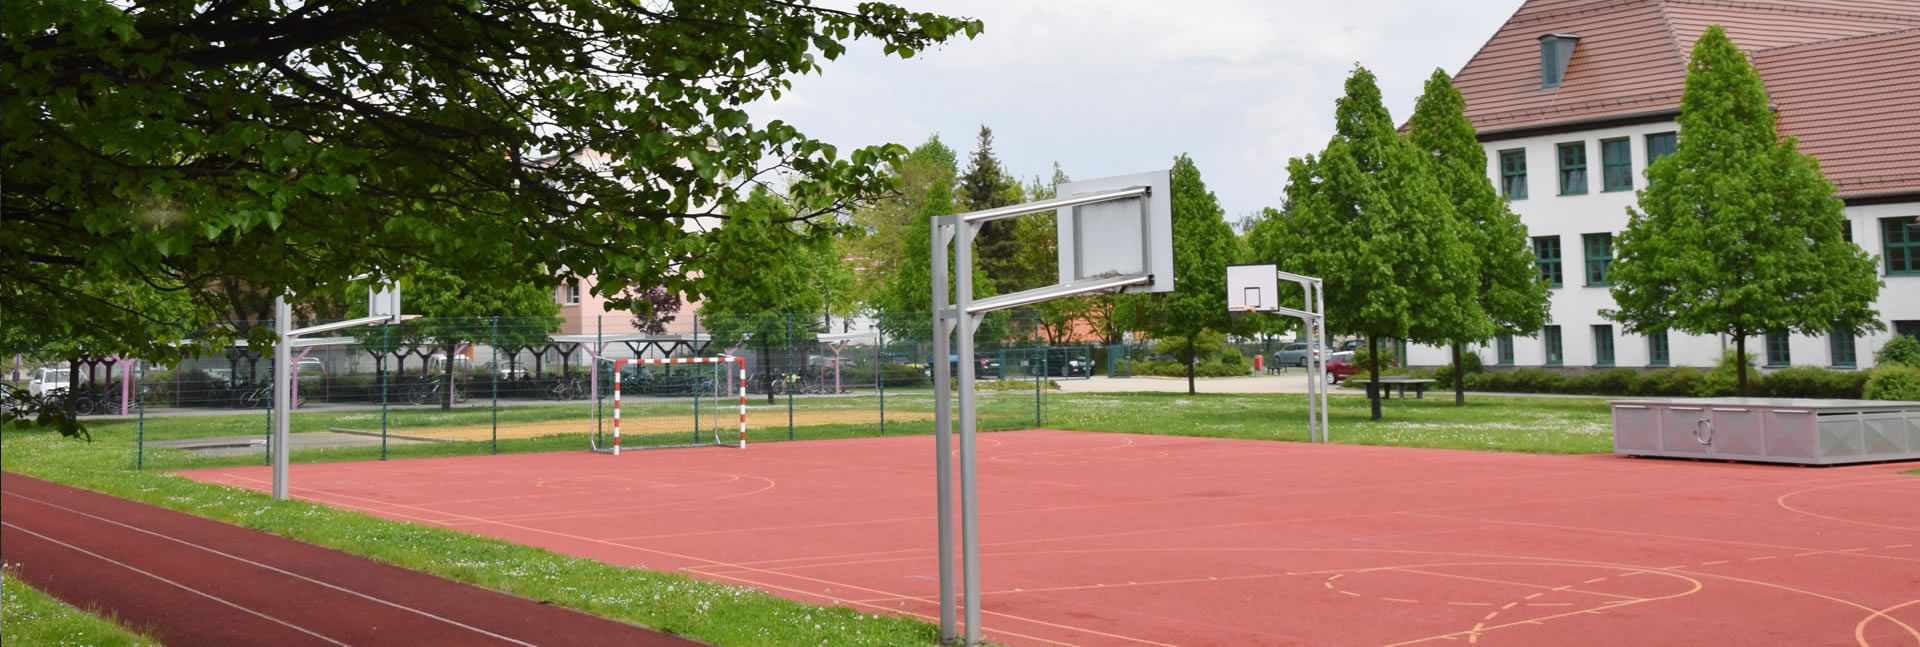 Sportstätten & Spielstätten in Niesky & Umgebung | Sporthallen, Turnhallen, Sportplätze